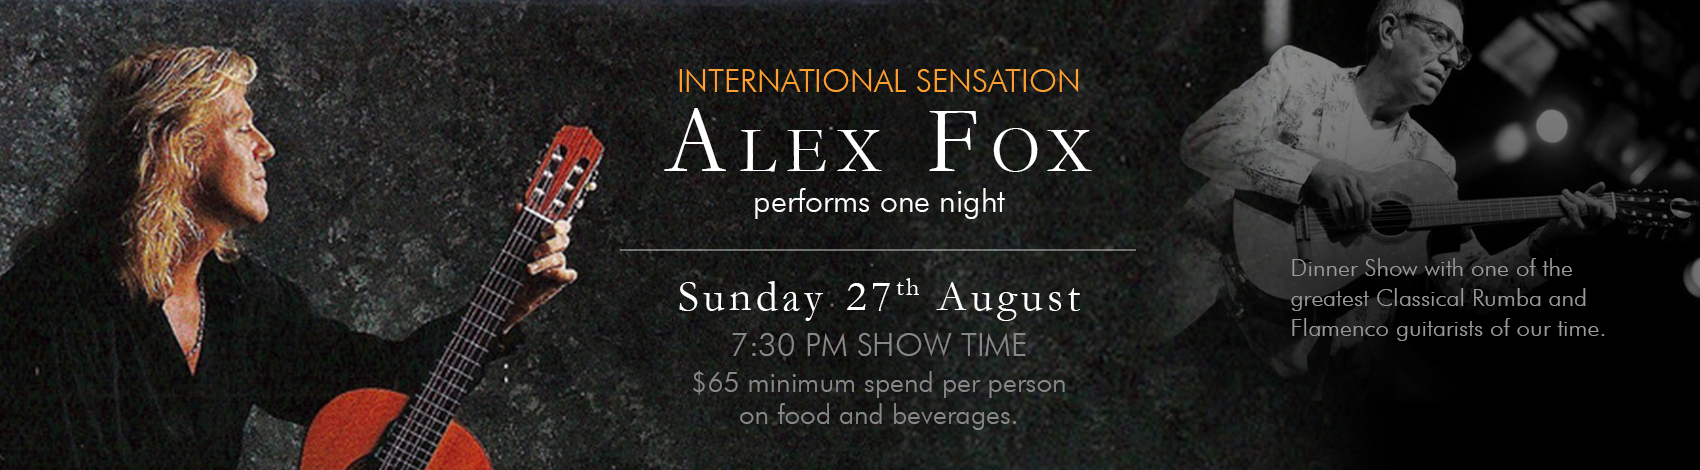 International Sensation Alex Fox performs one night August 27th 7:30 PM Show Time.